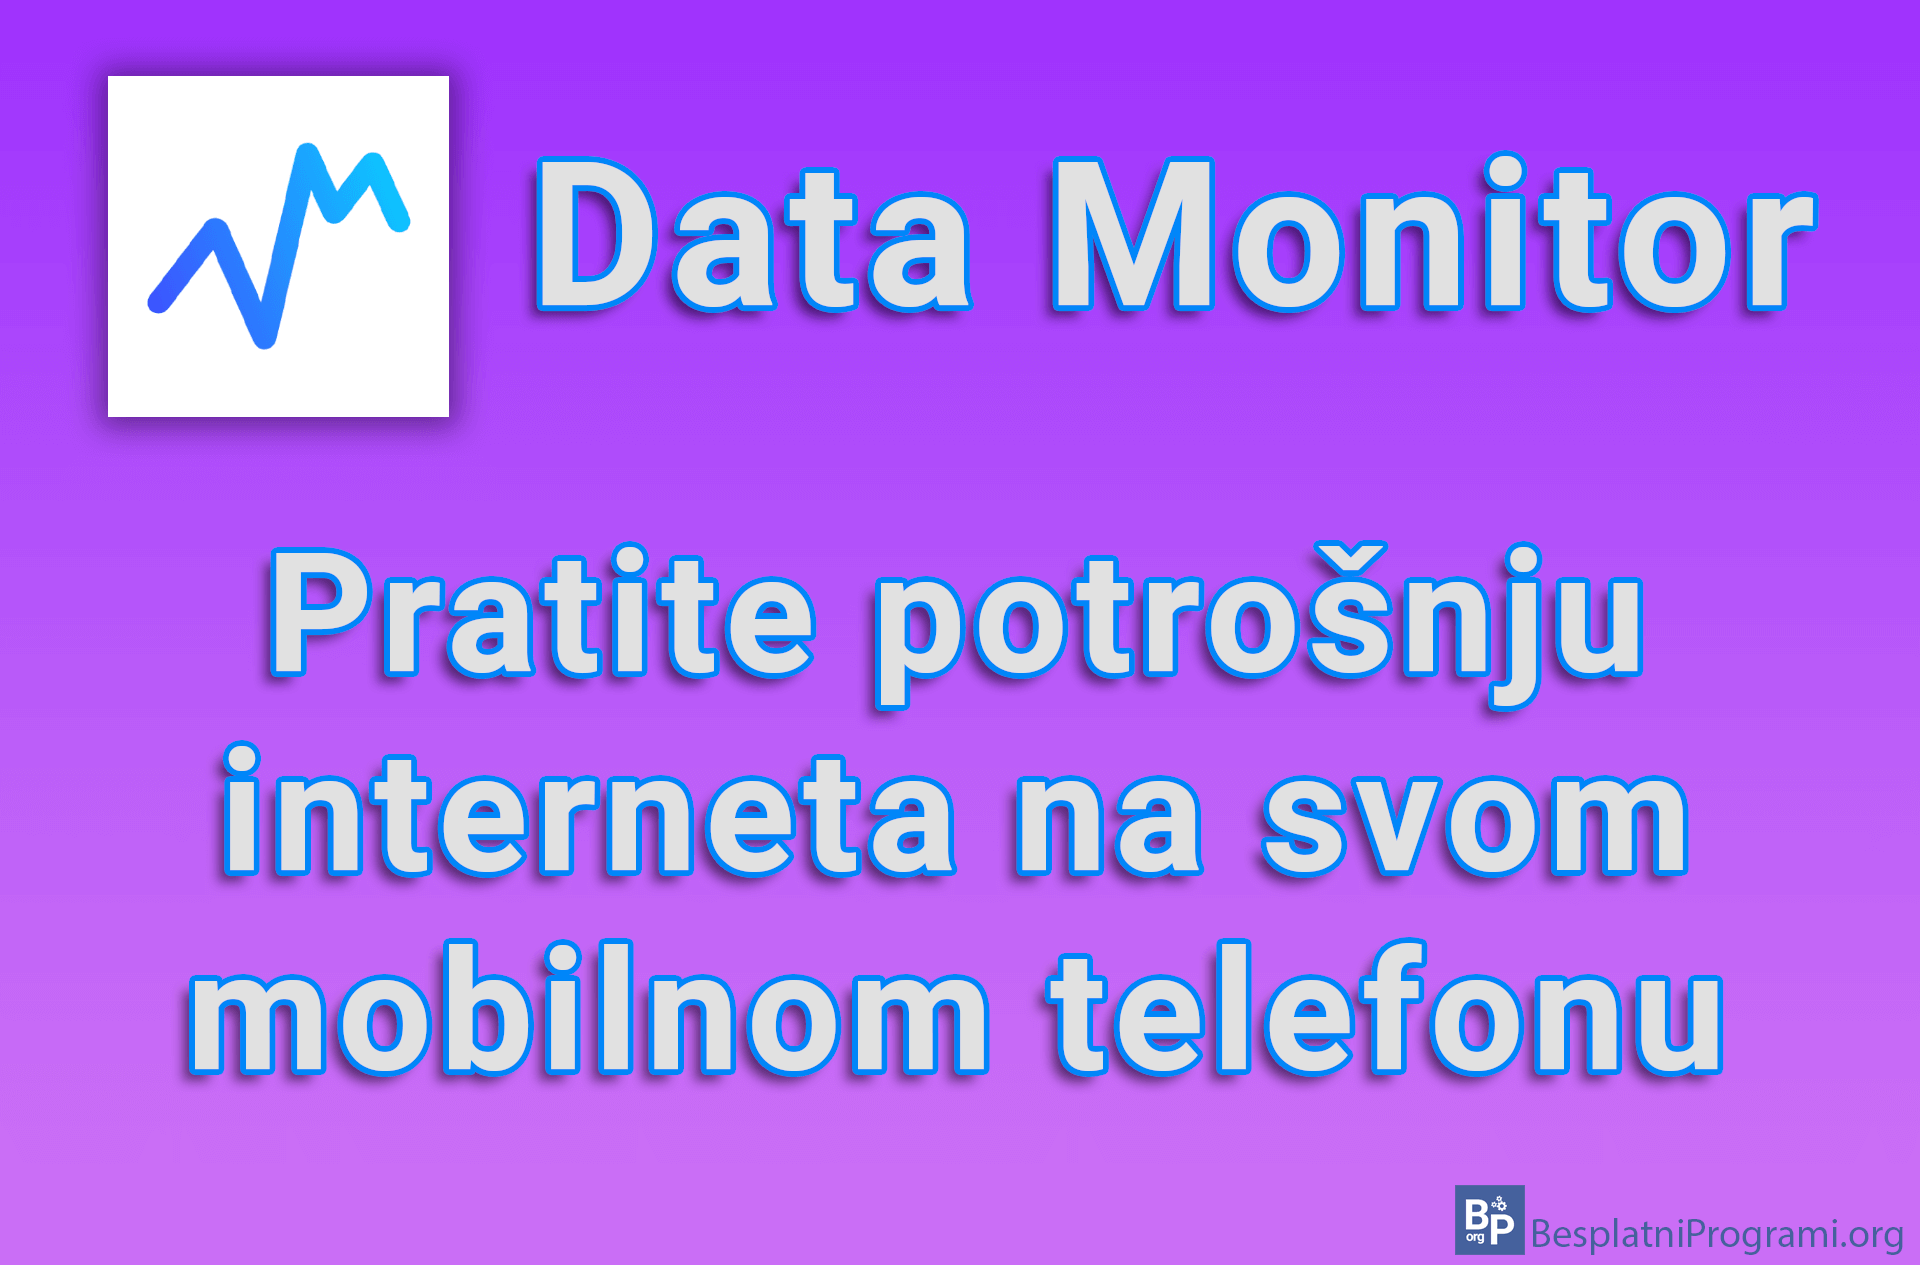 Data Monitor - Pratite potrošnju interneta na svom mobilnom telefonu